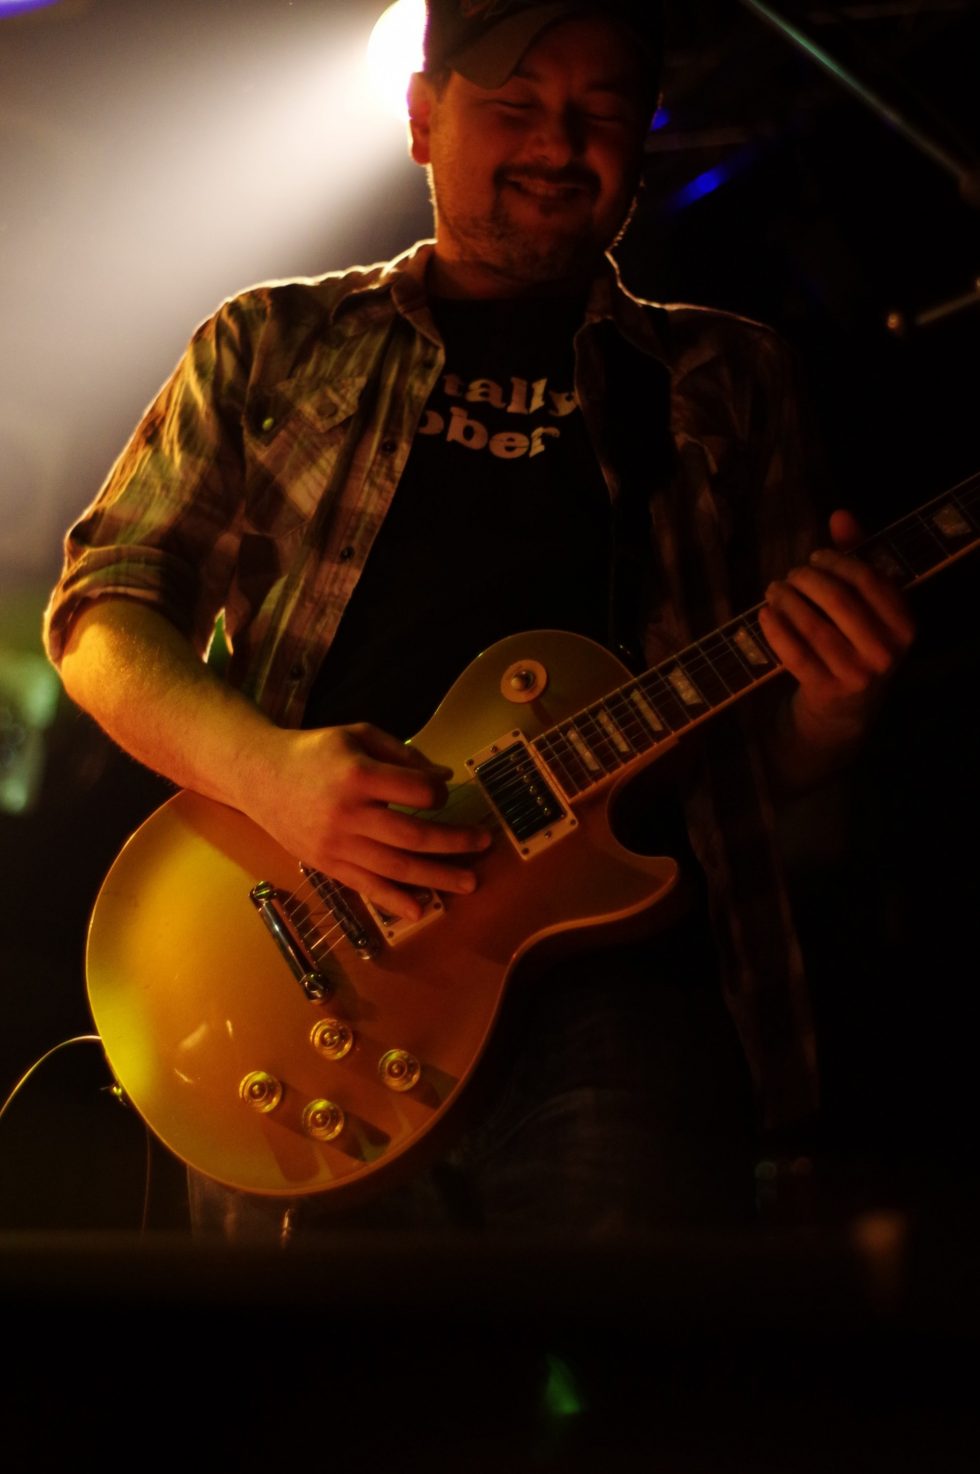 Alex Balazik from the Three Skins on Guitar